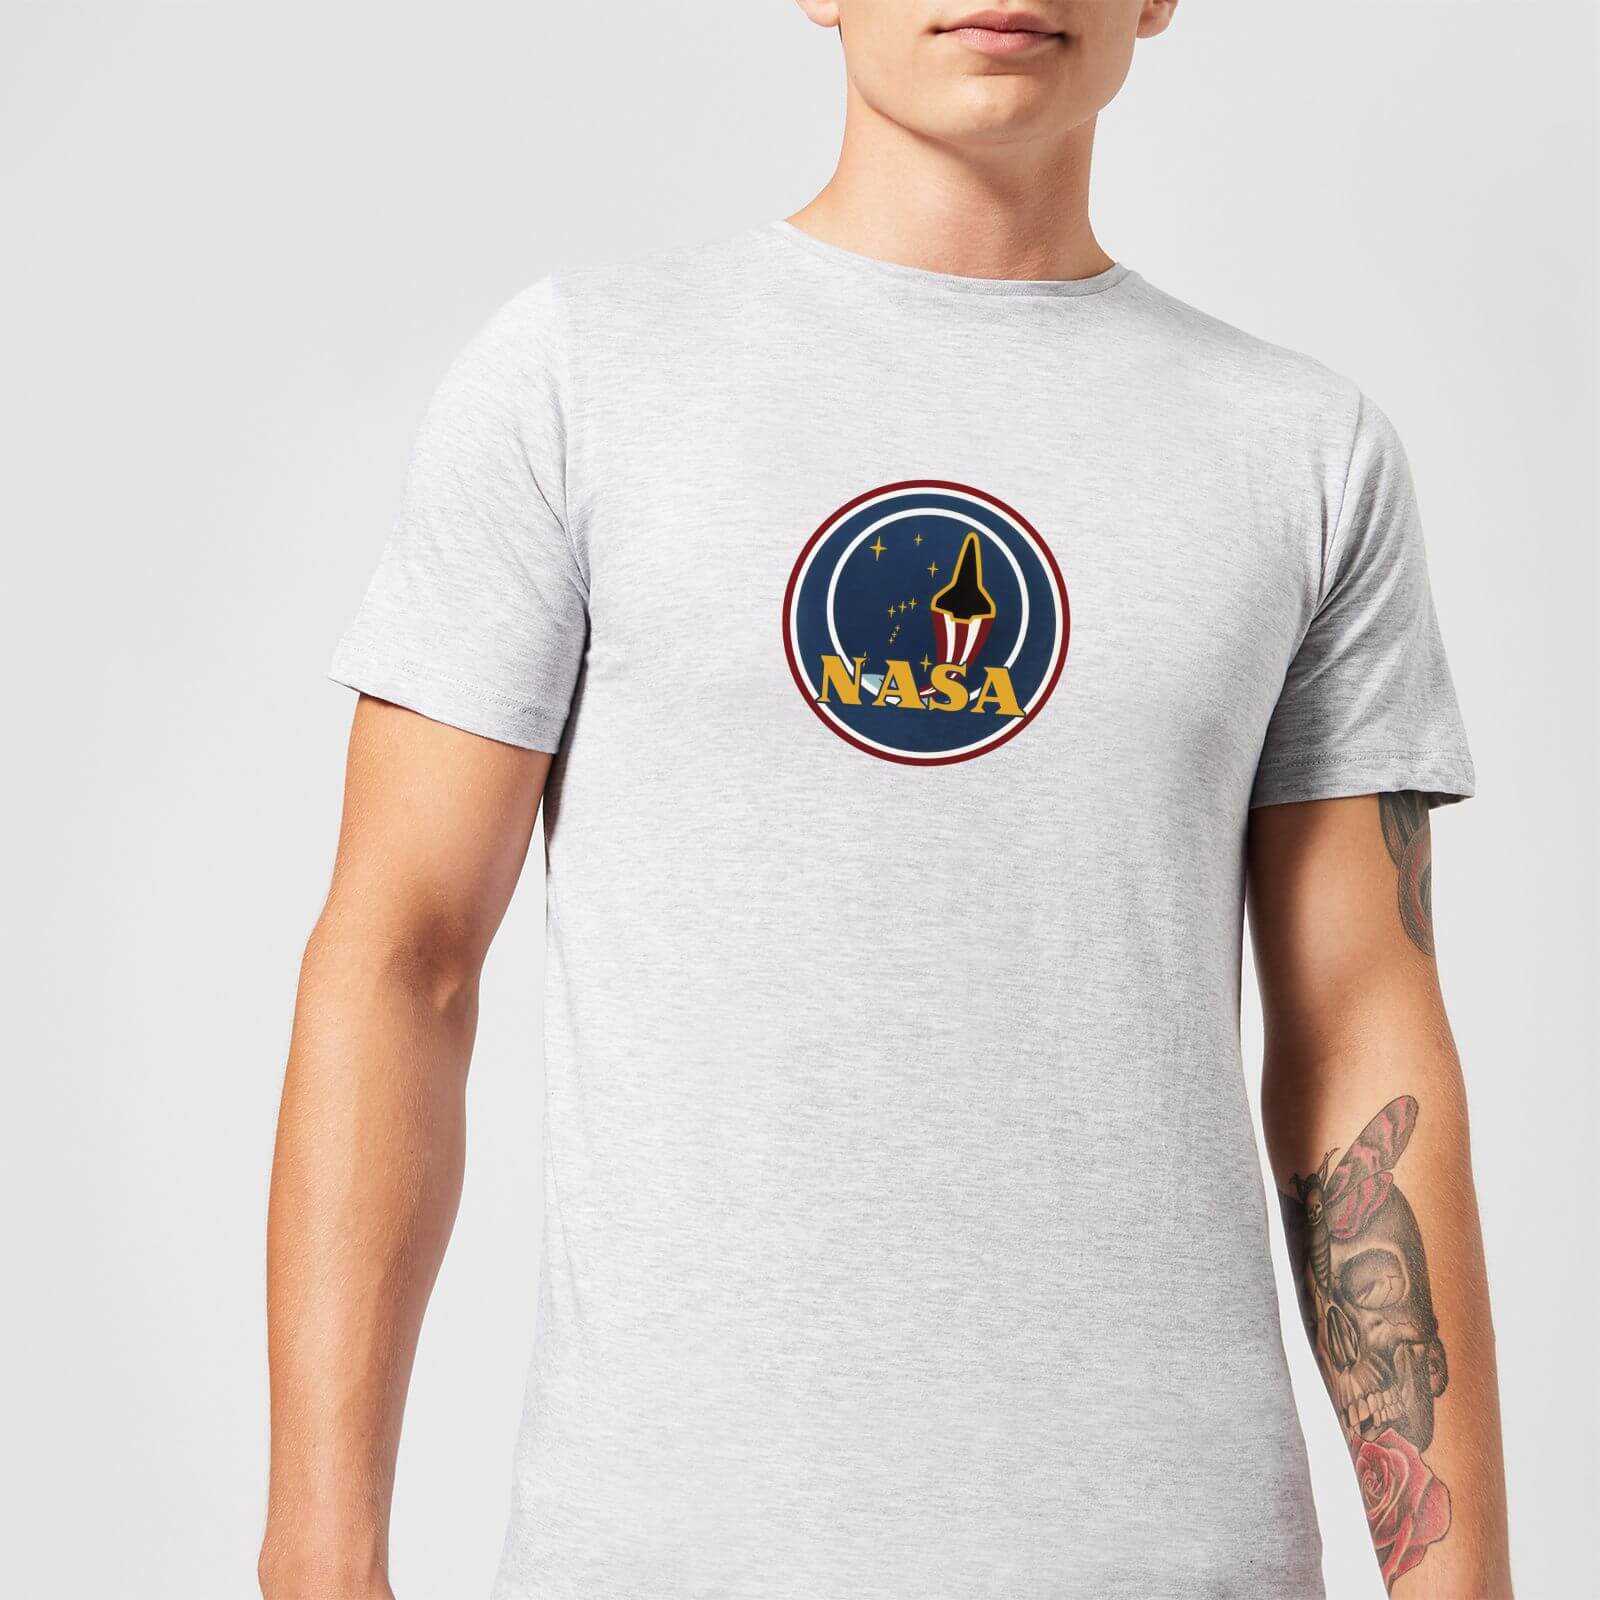 NASA JM Patch T-Shirt - Grey - 3XL